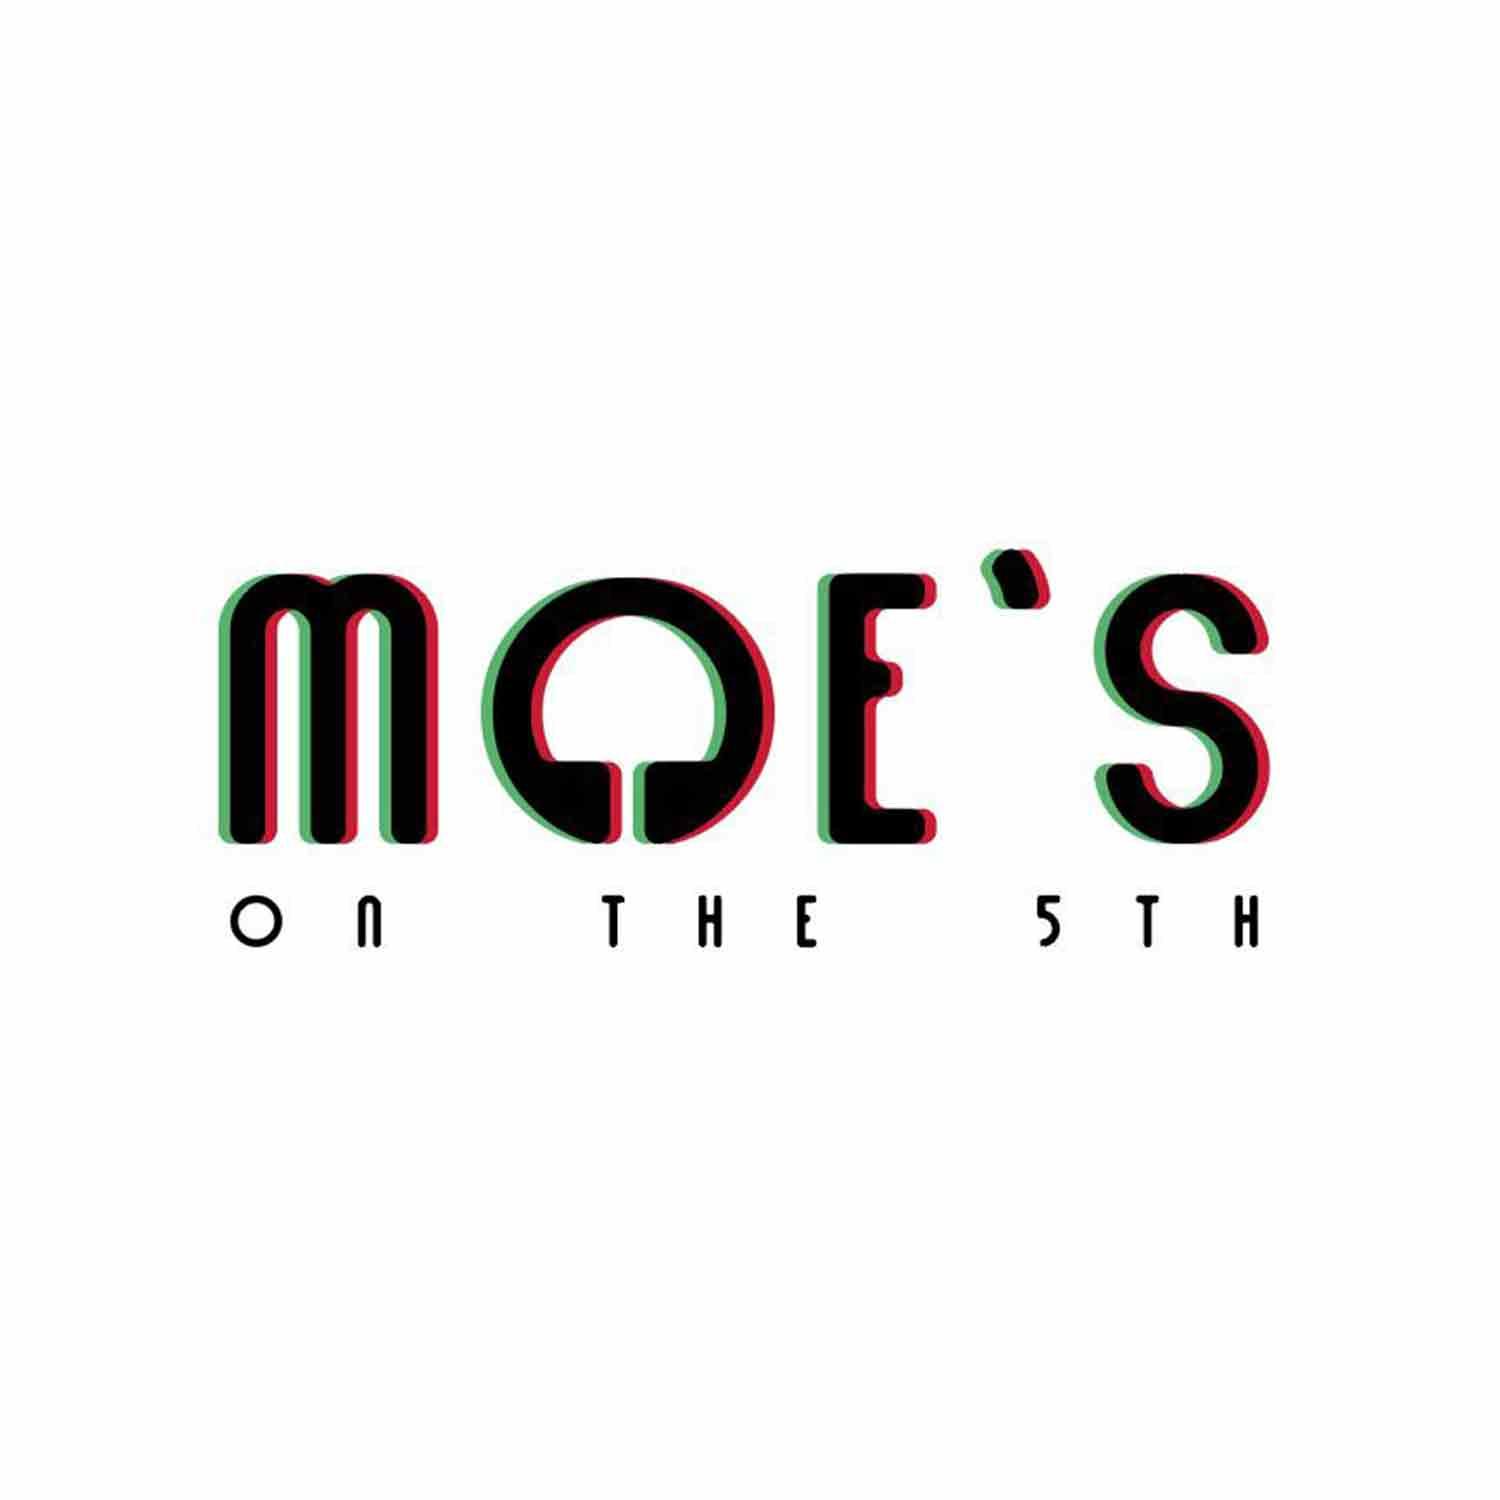 Tuesdays at Moe's